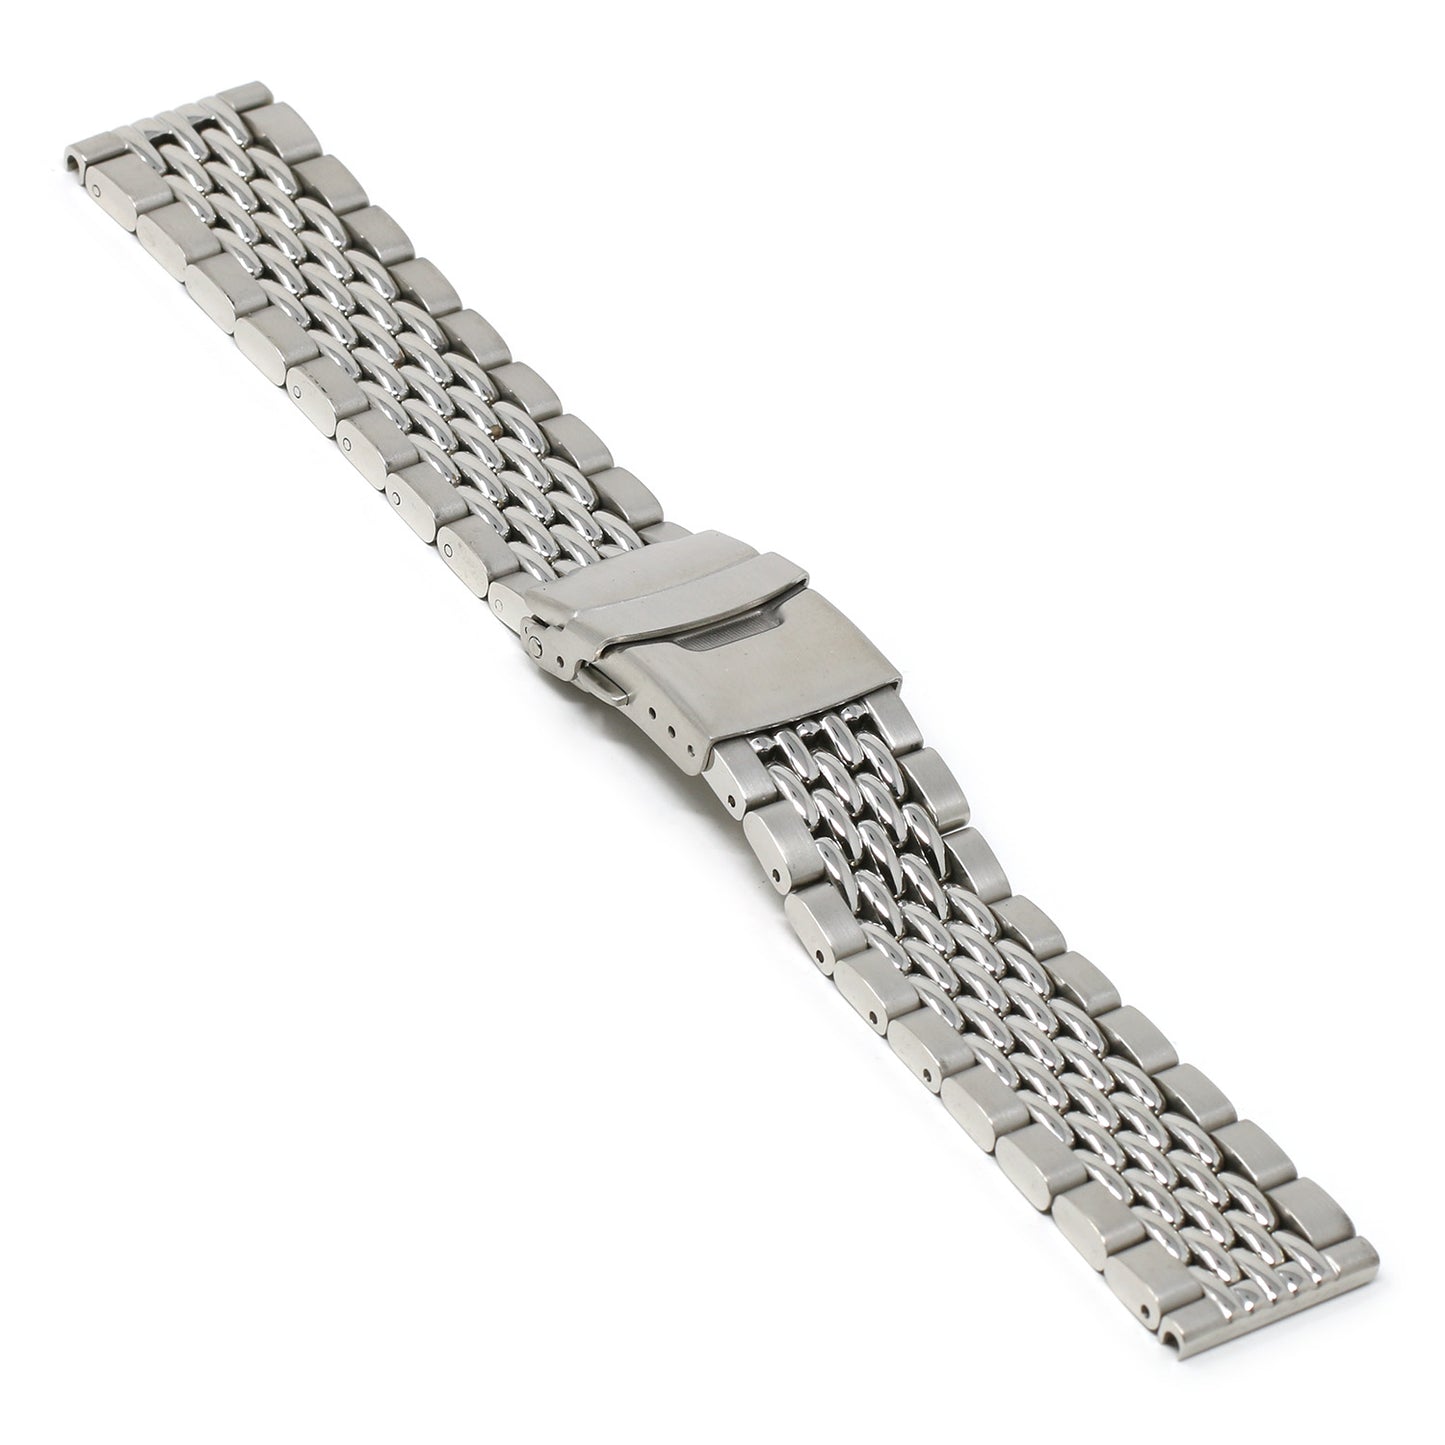 22mm Beads of Rice Smart Watch Bracelet